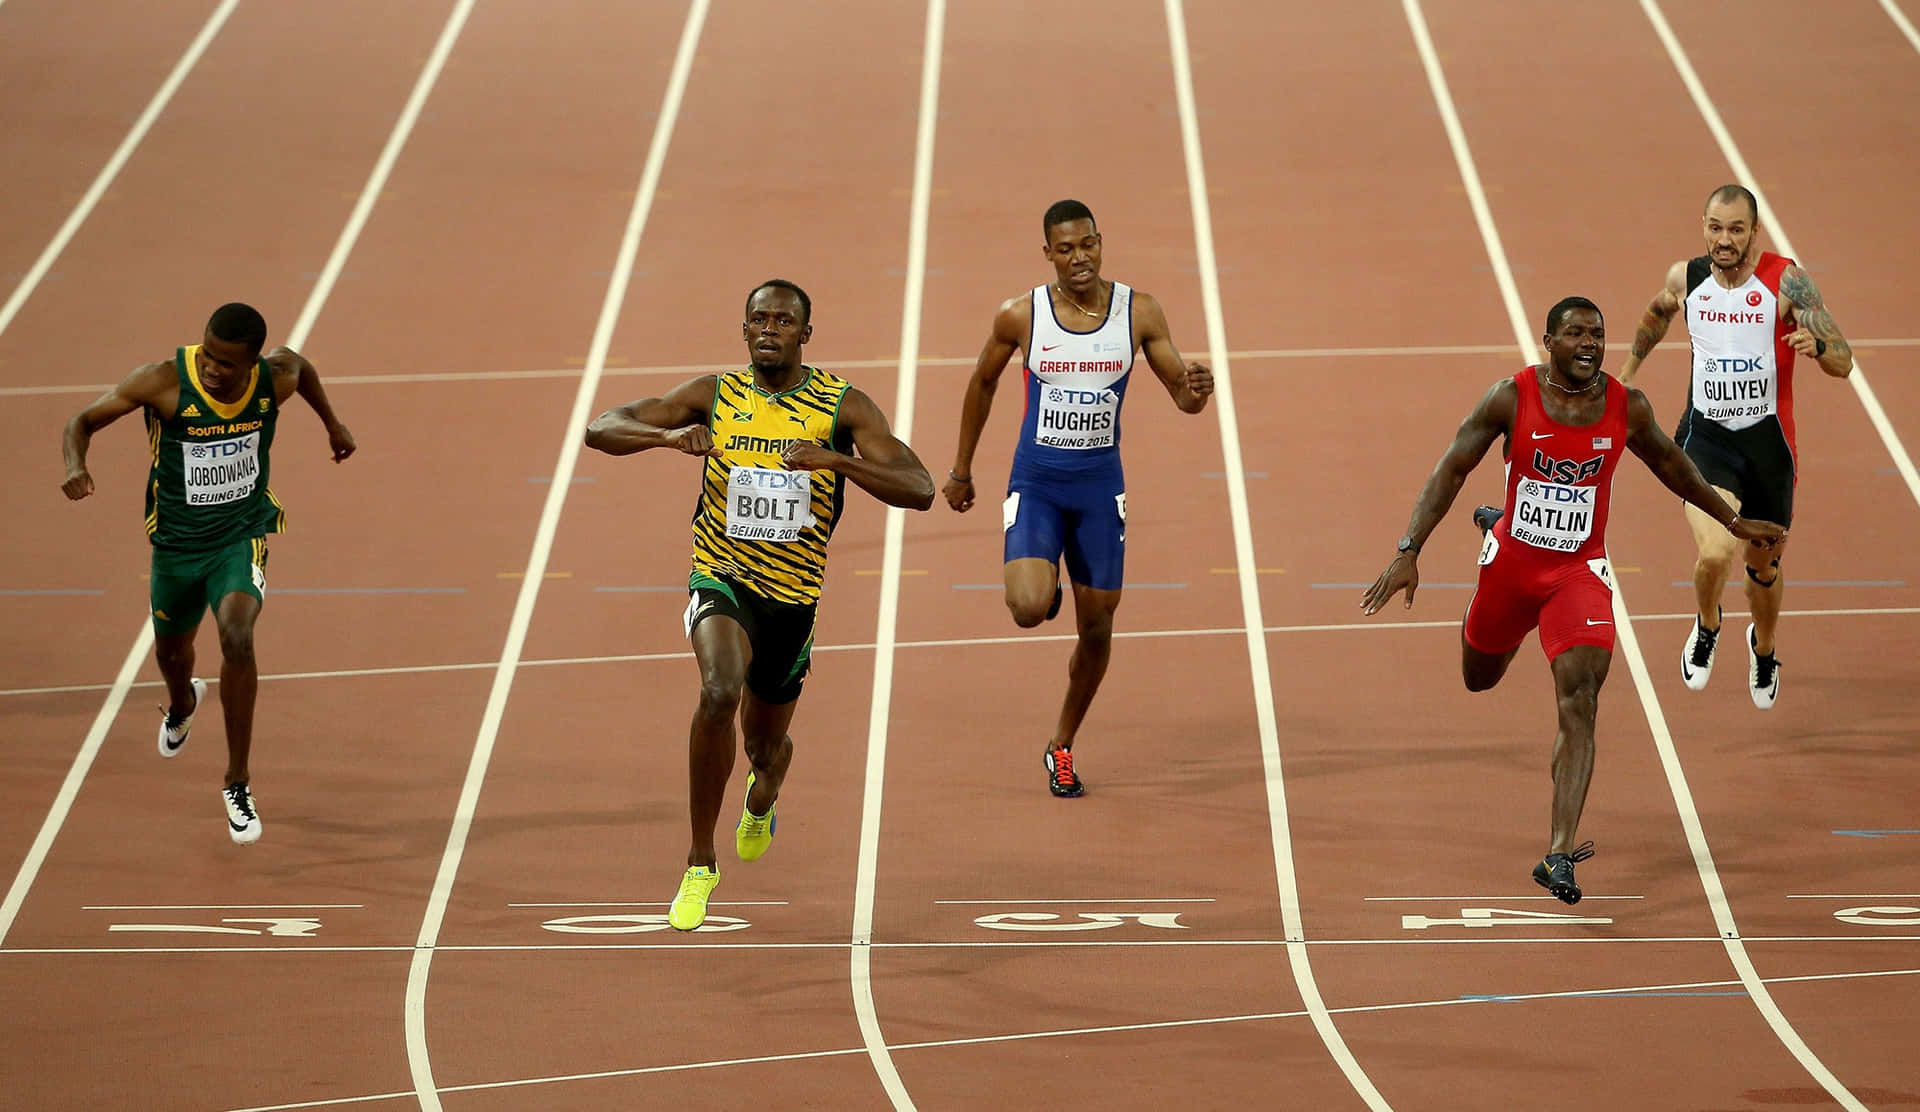 Jamaicanskidrottare Usain Bolt I Tävling. Wallpaper